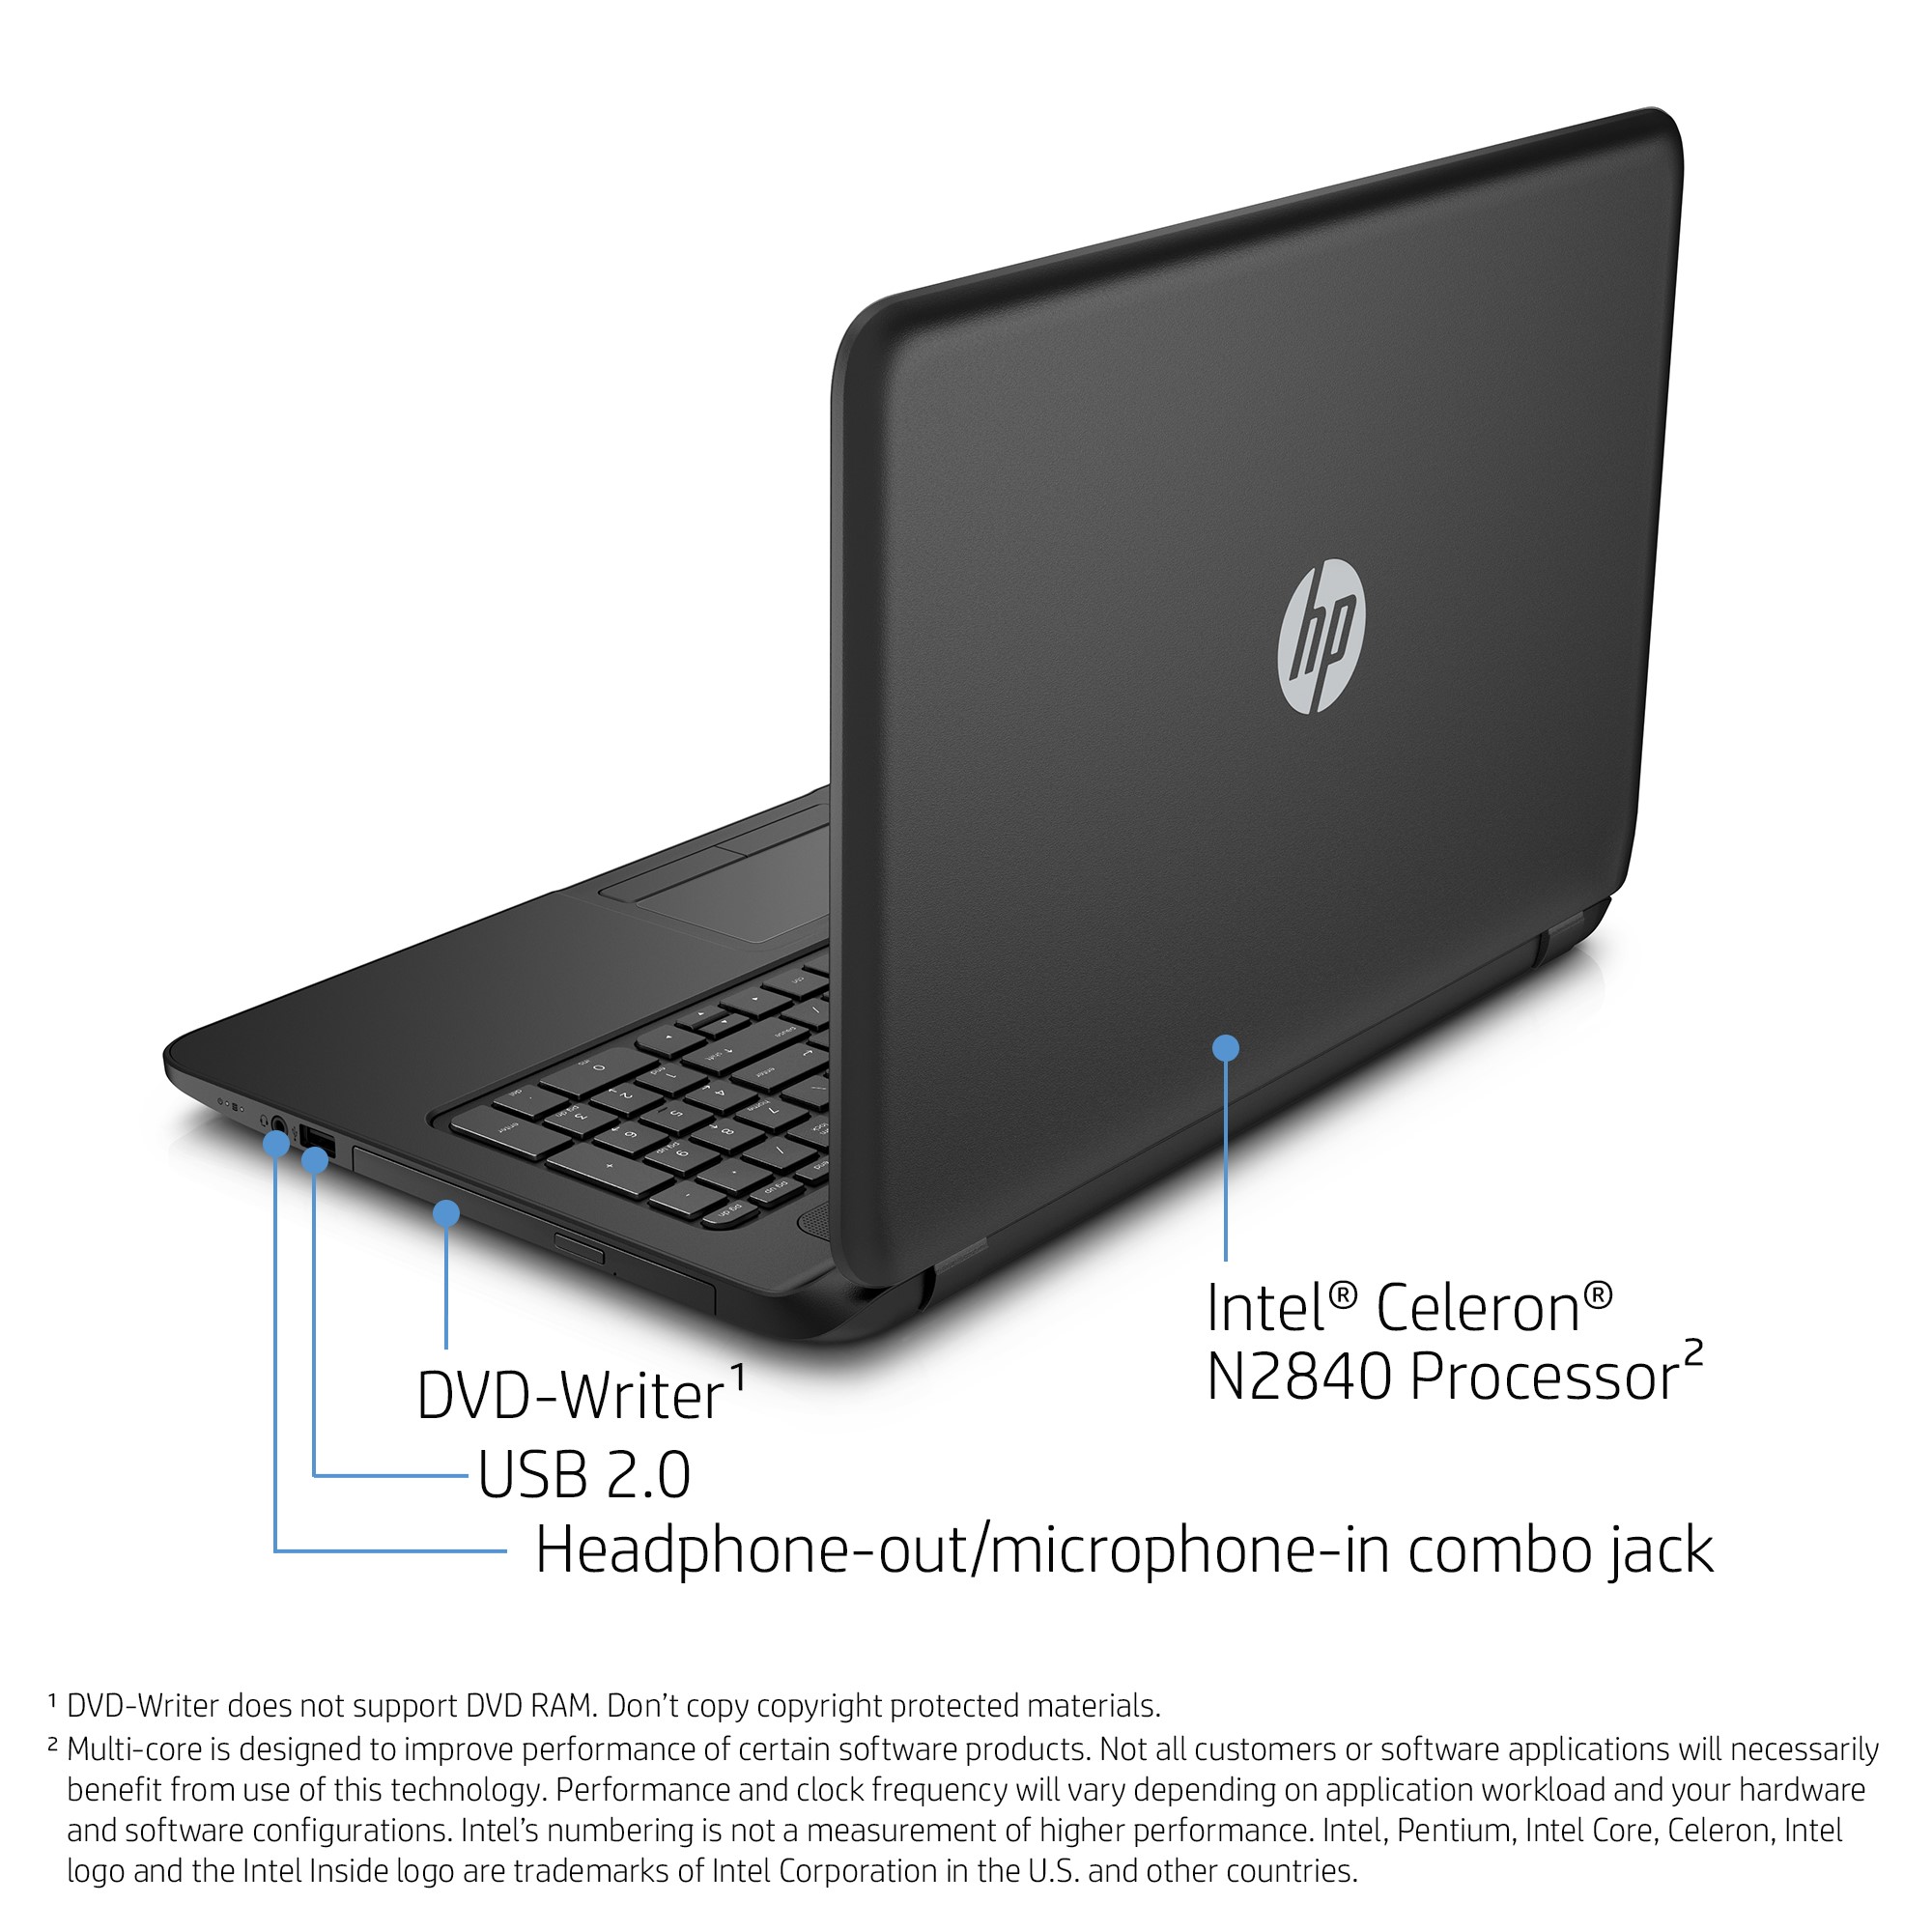 HP 15-f246wm 15.6" Laptop", Intel Celeron N2840, Intel HD Graphics, 500GB HDD, 4GB RAM, 15-F246WM Black - image 3 of 4